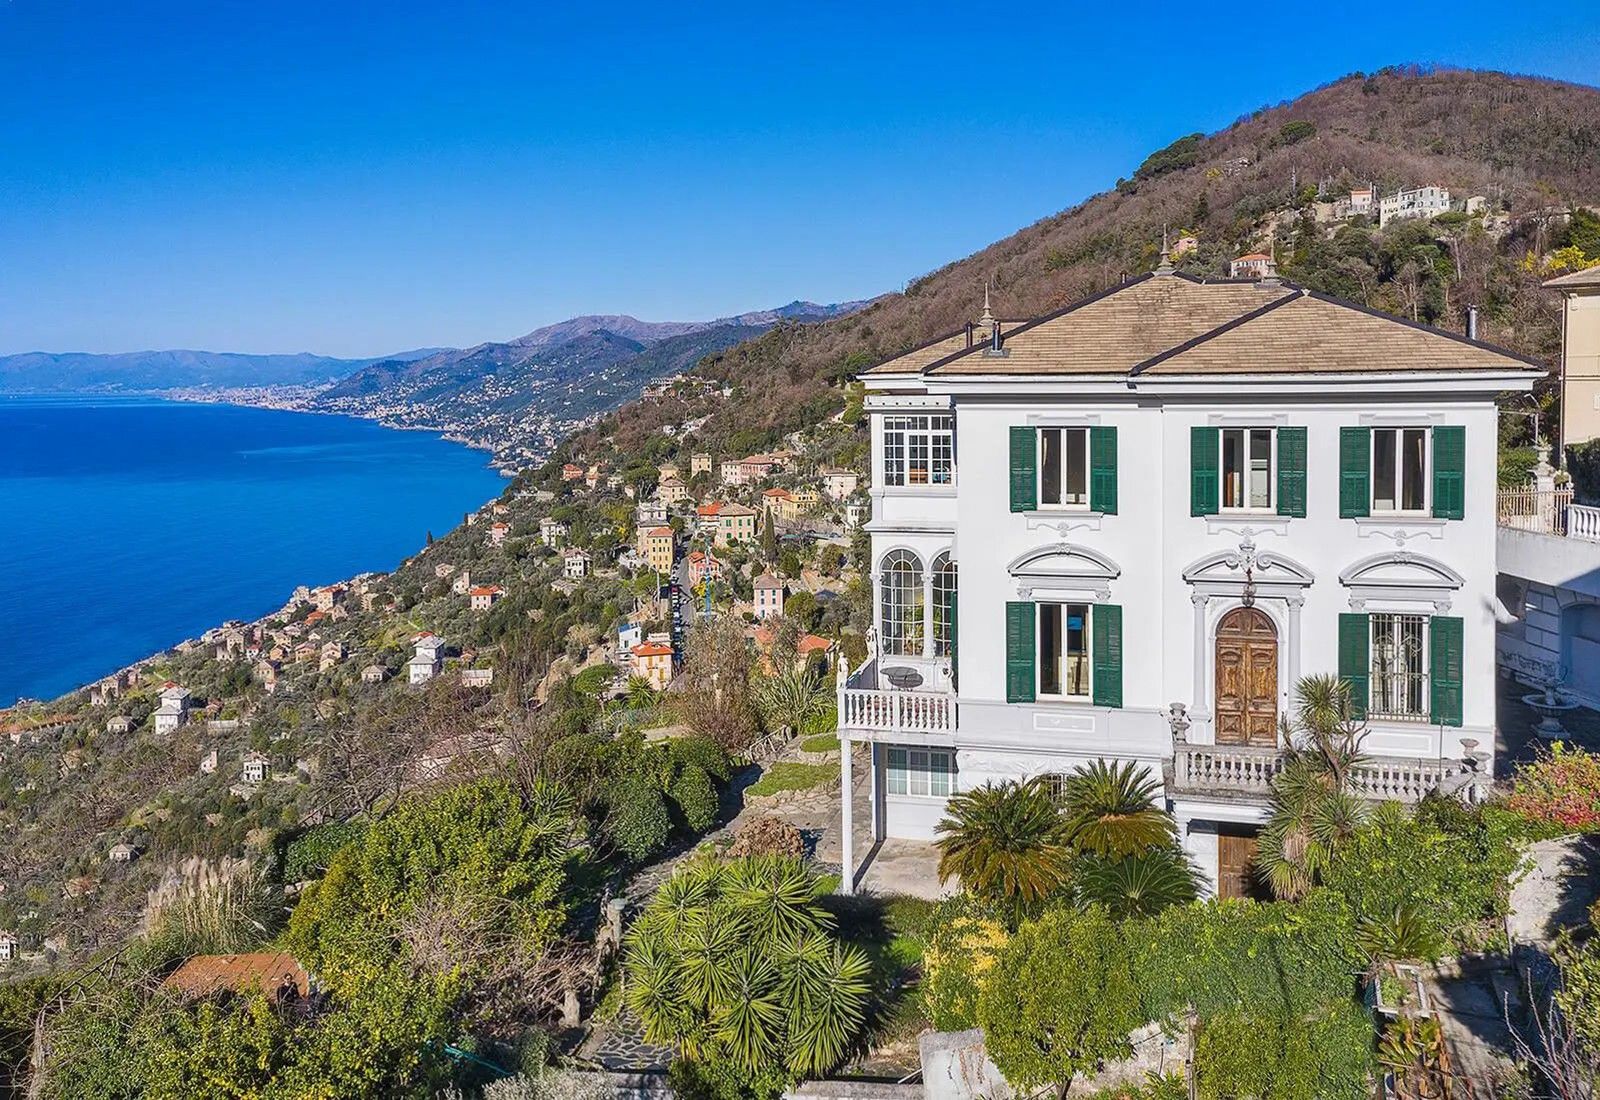 Fotos Exklusive historische Villa in Ligurien mit fantastischem Meerblick